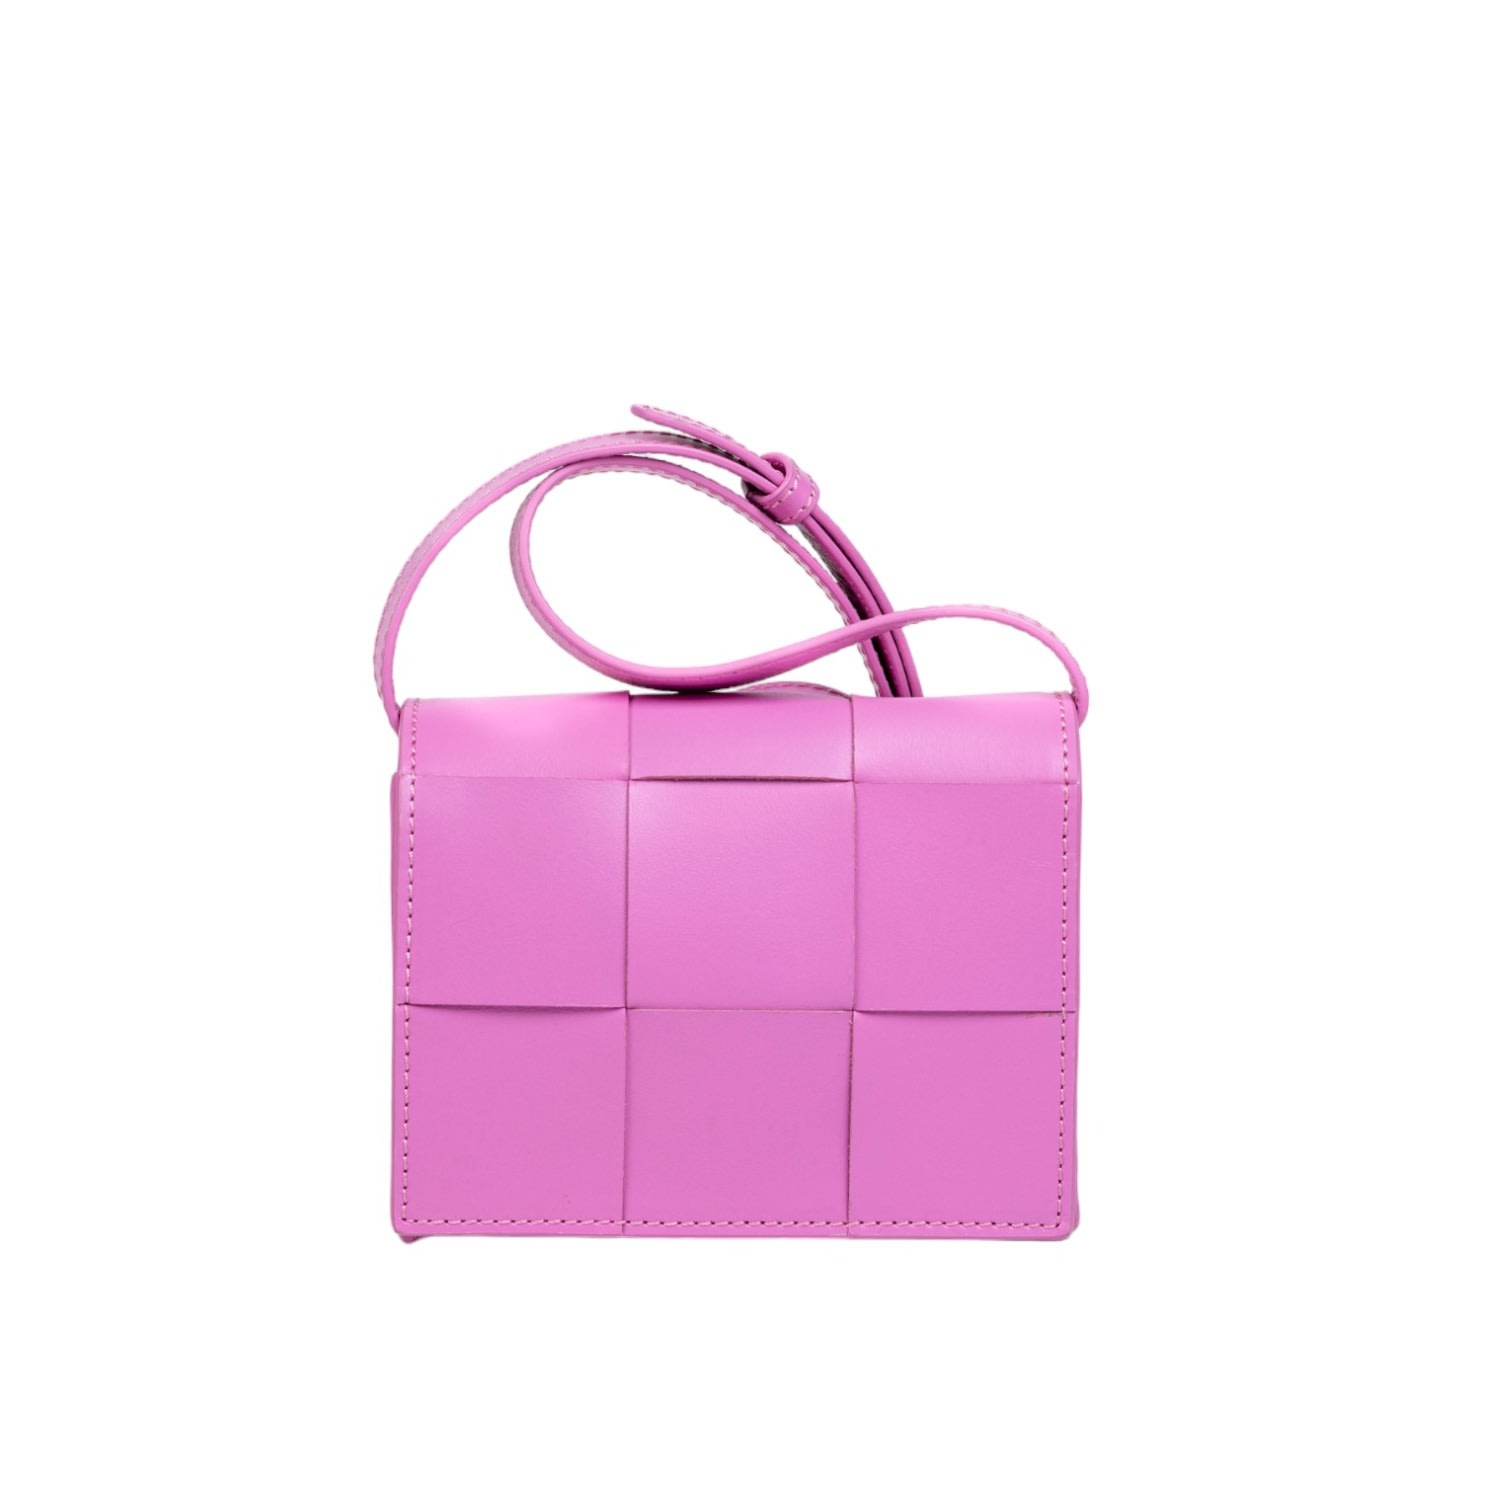 Aleo Women's Pink / Purple Matchbox Mini Cross Body - Pink Soft Leather